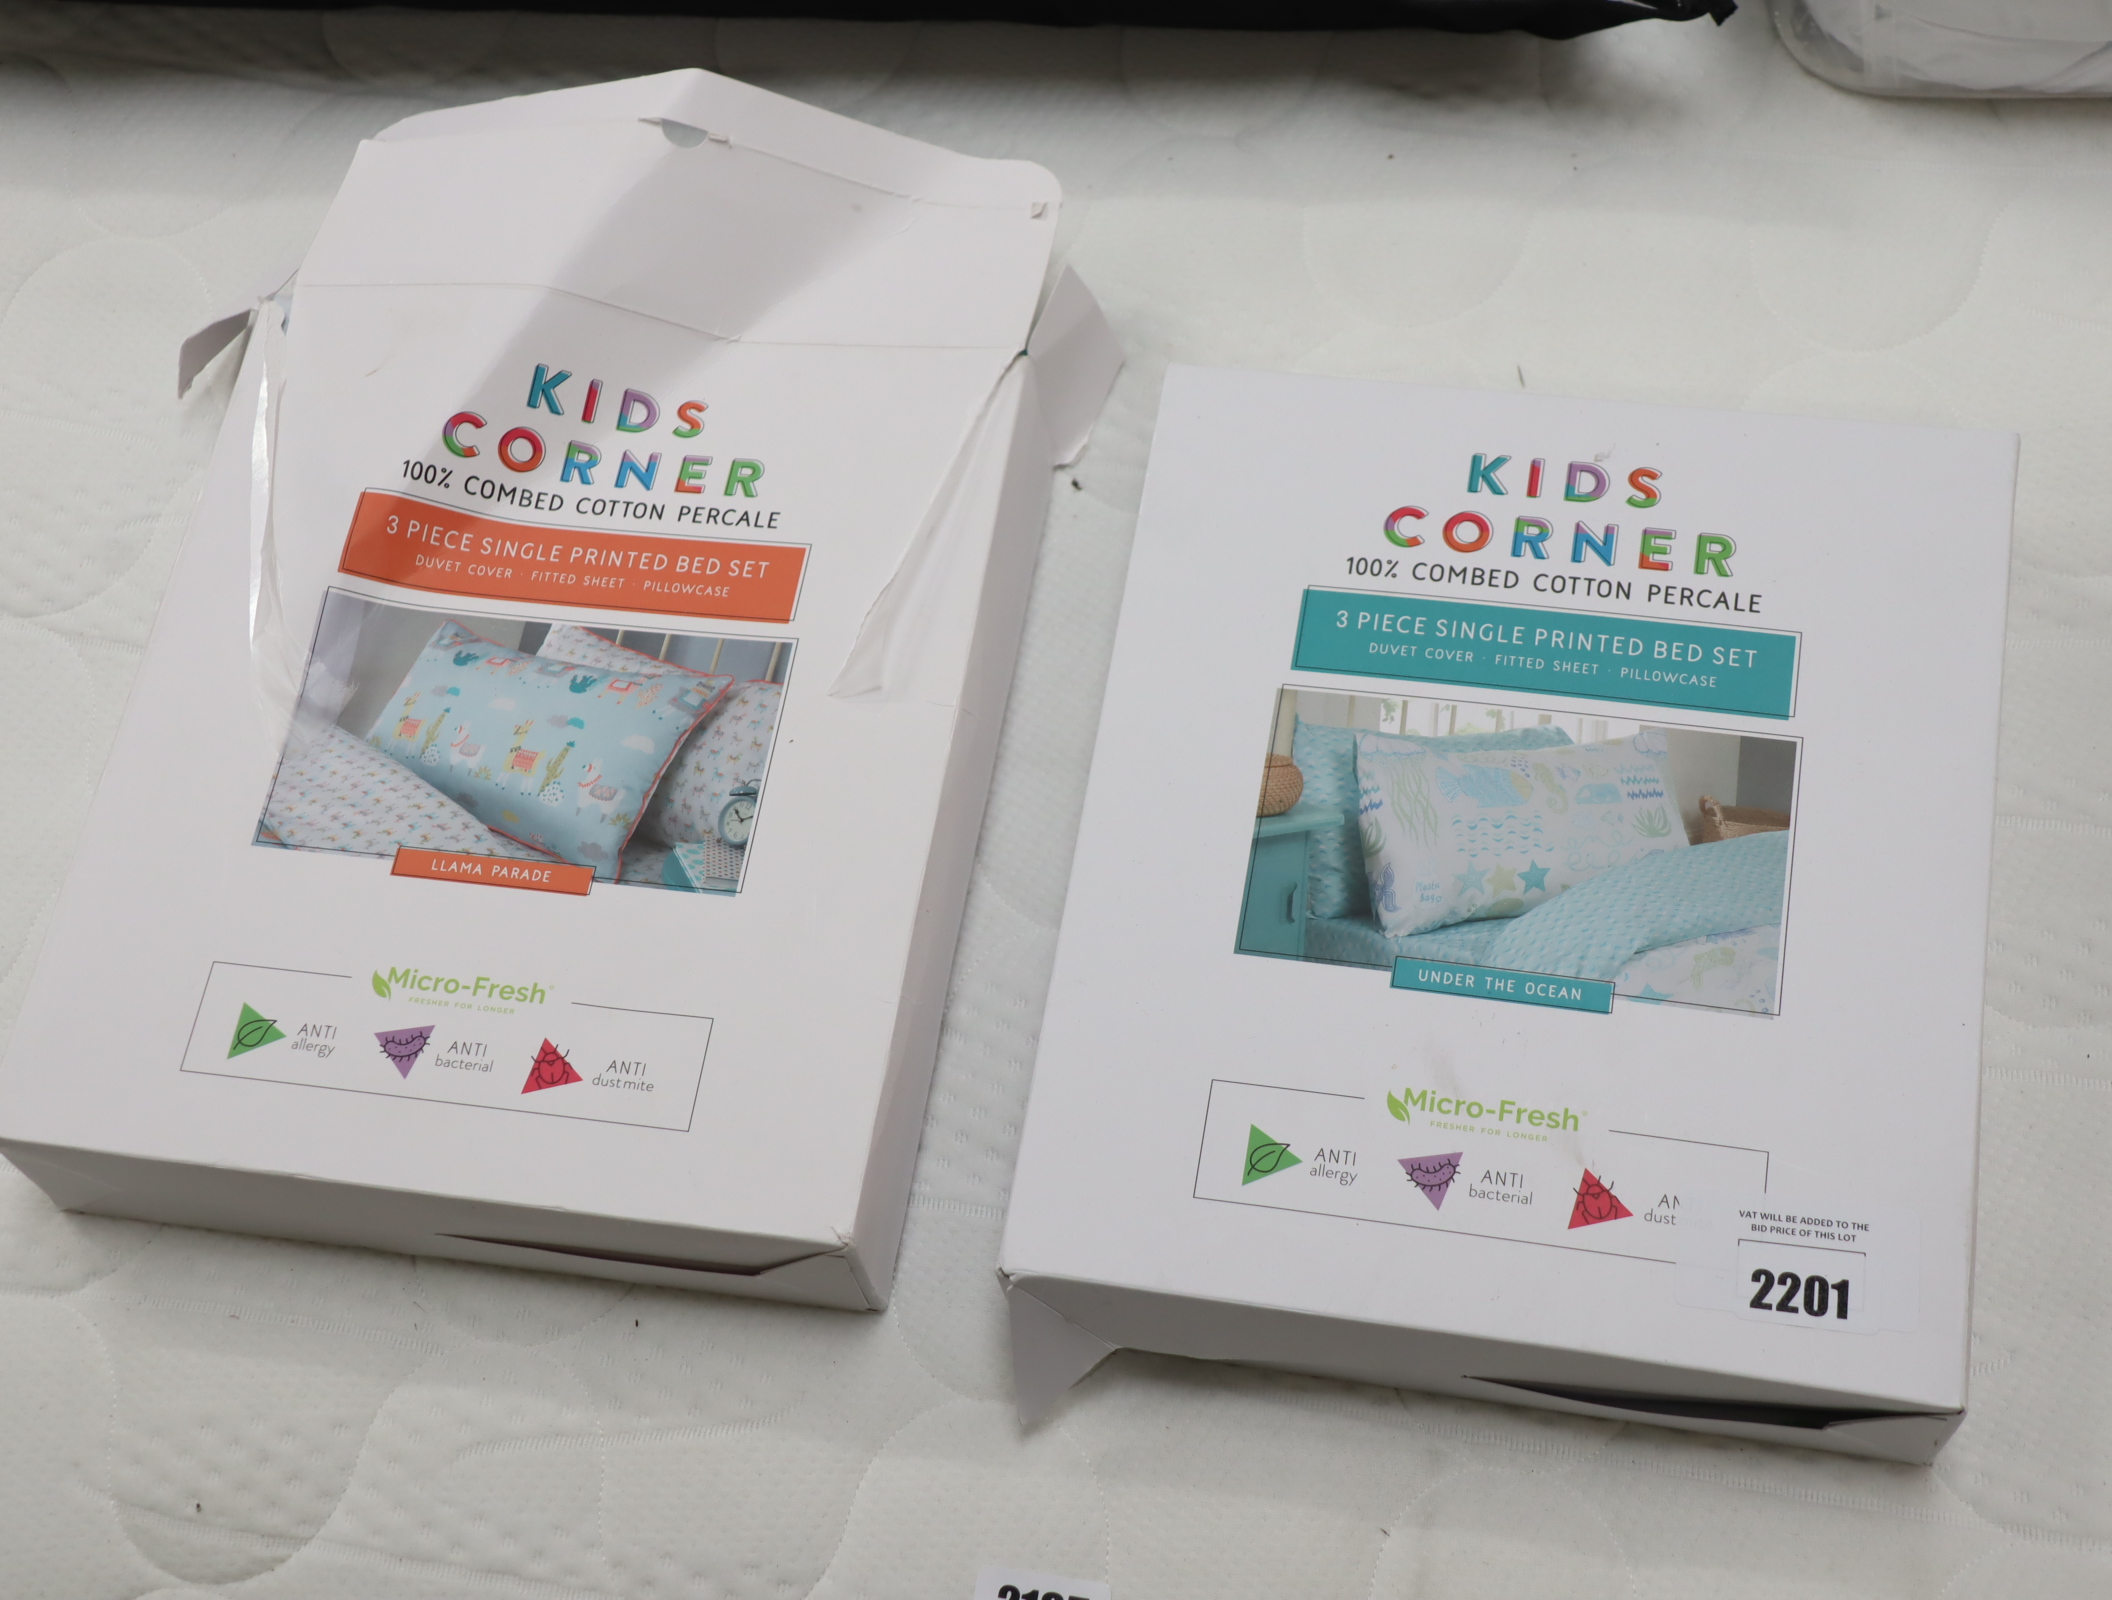 2 Kids Corner printed bed sets